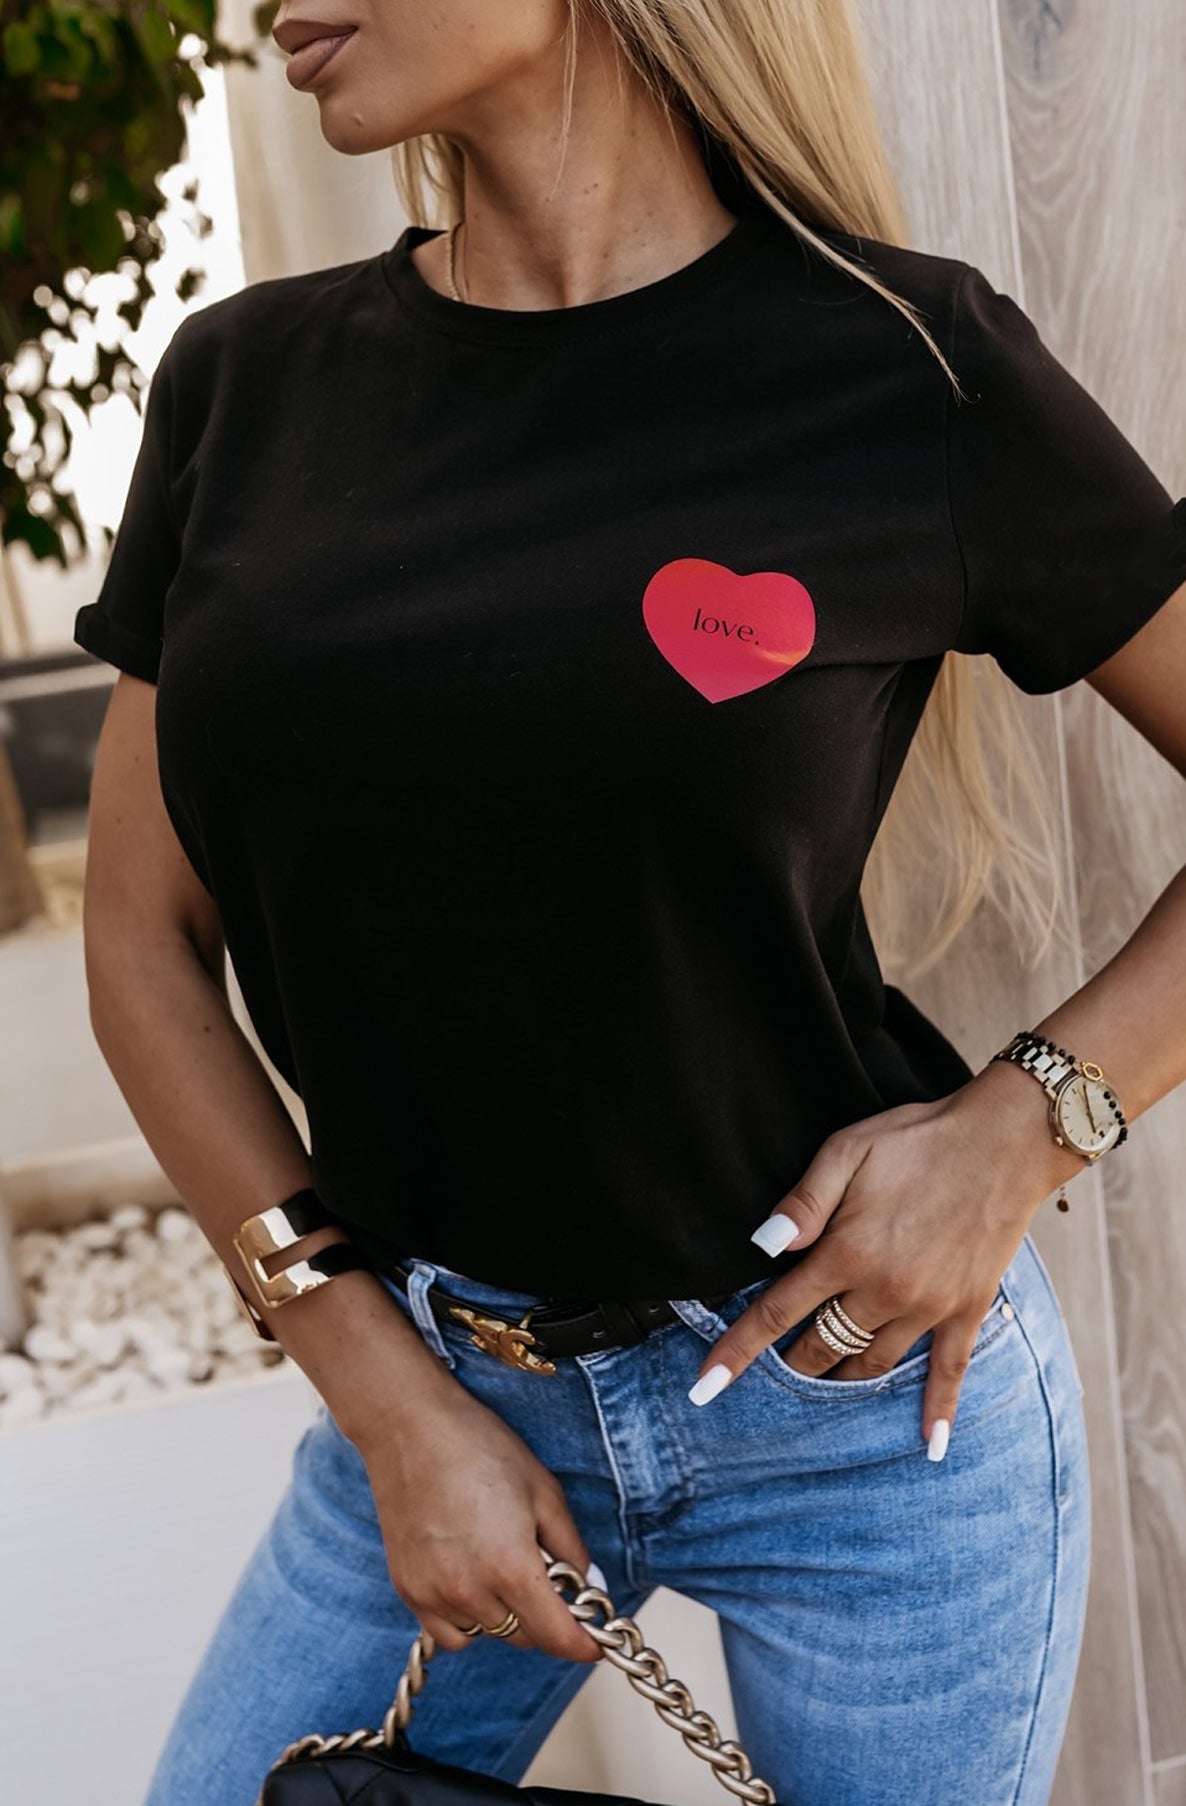 "Love" Heart Women's T-Shirt UK: Playful design, high-quality fabric for casual comfort.